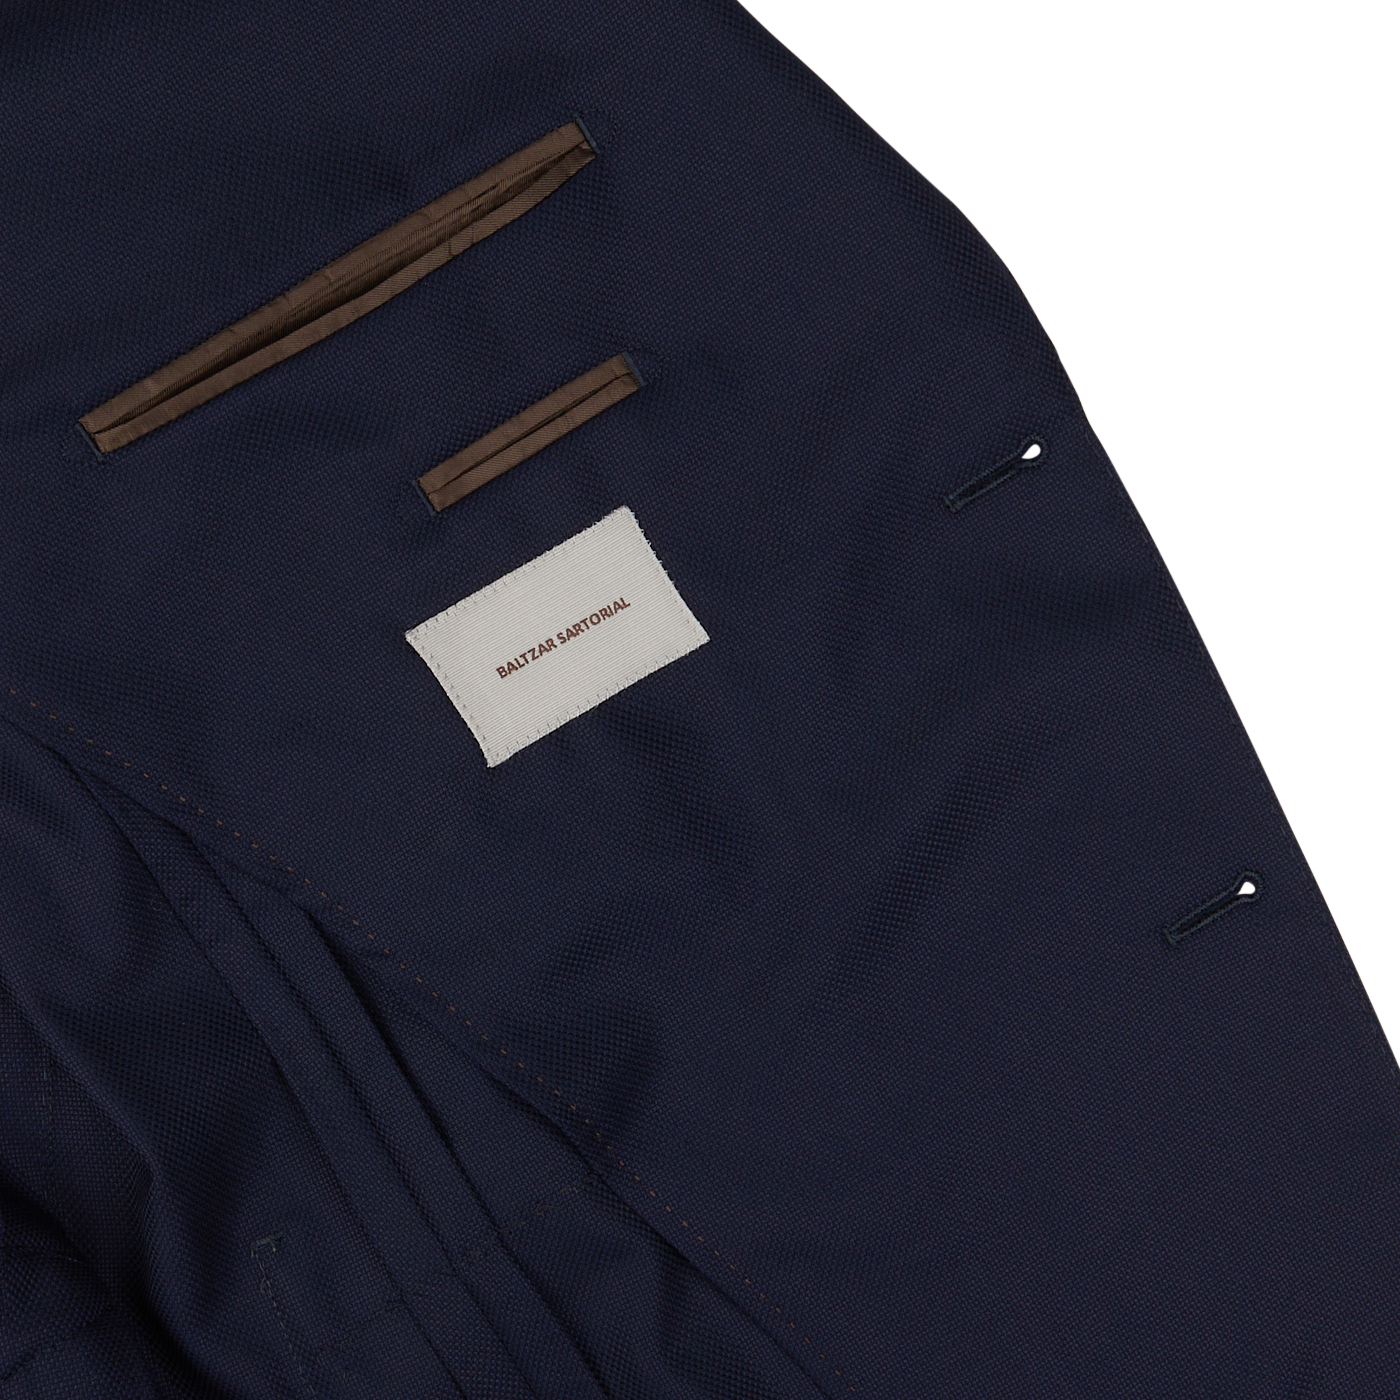 Close-up of a Baltzar Sartorial navy hopsack blazer label and stitching details.